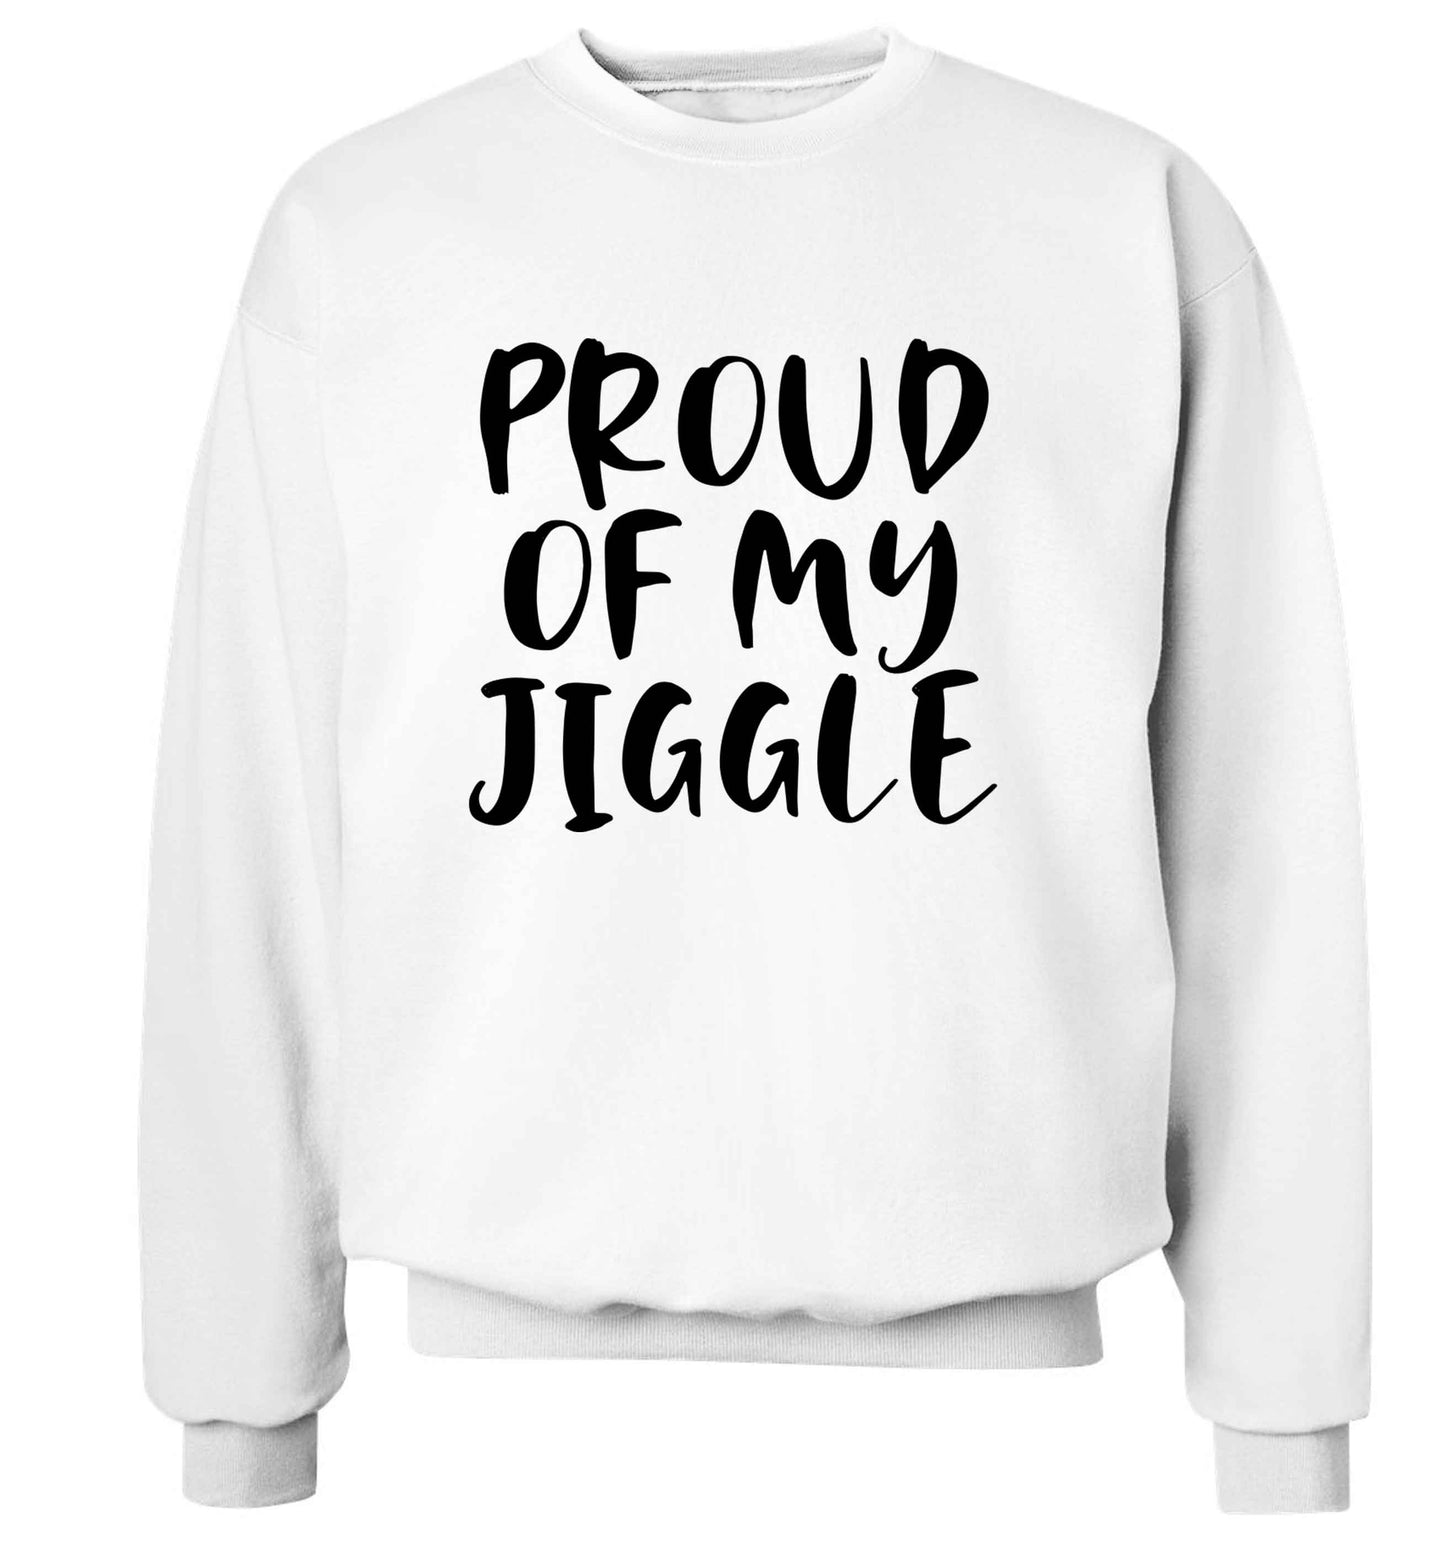 Proud of my jiggle adult's unisex white sweater 2XL